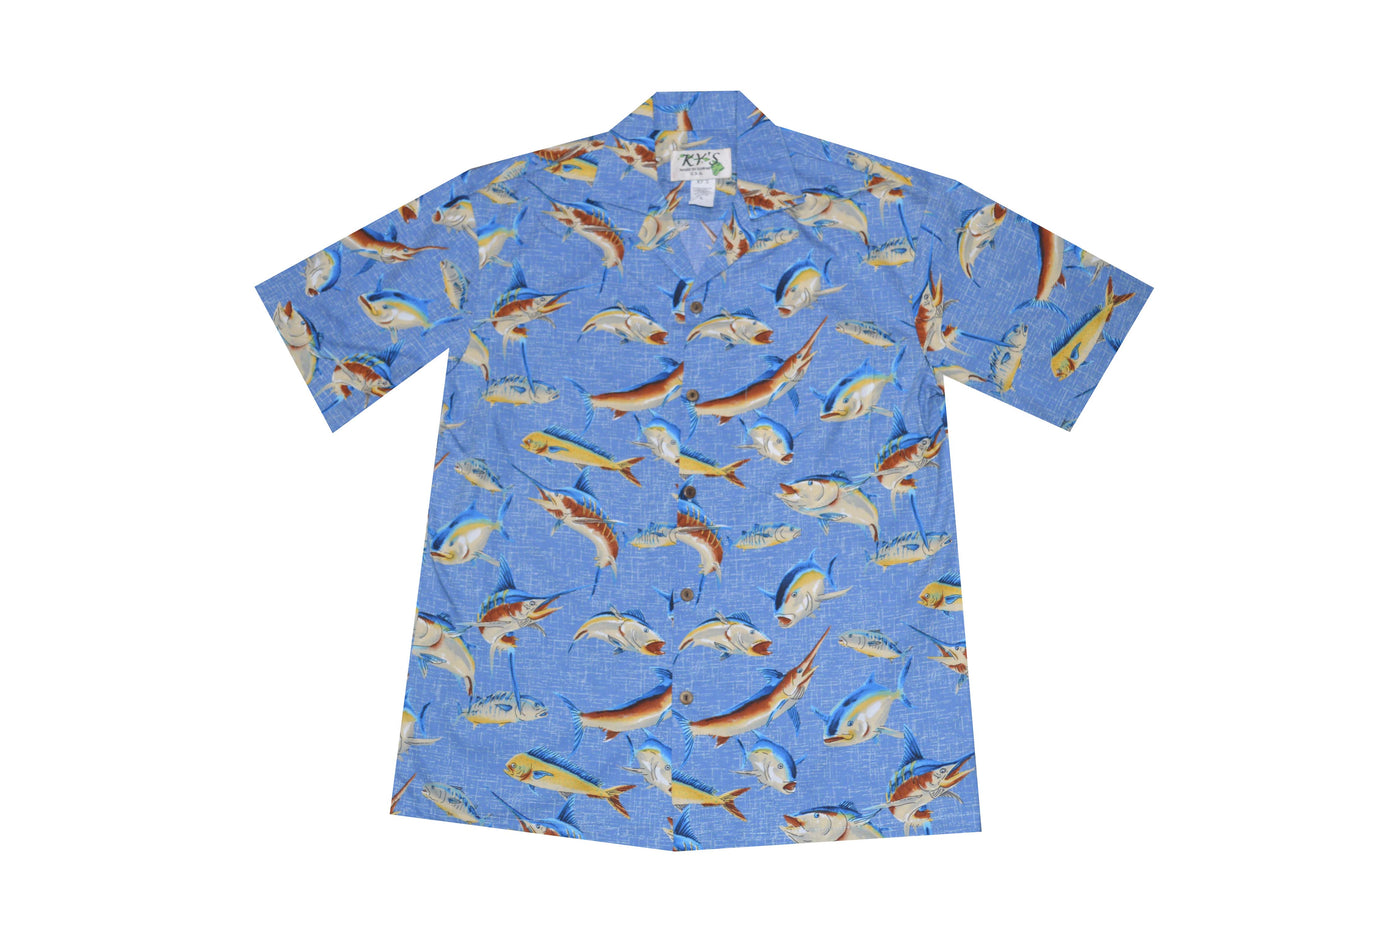 Hawaiian Fish Men's Aloha Cotton Shirts